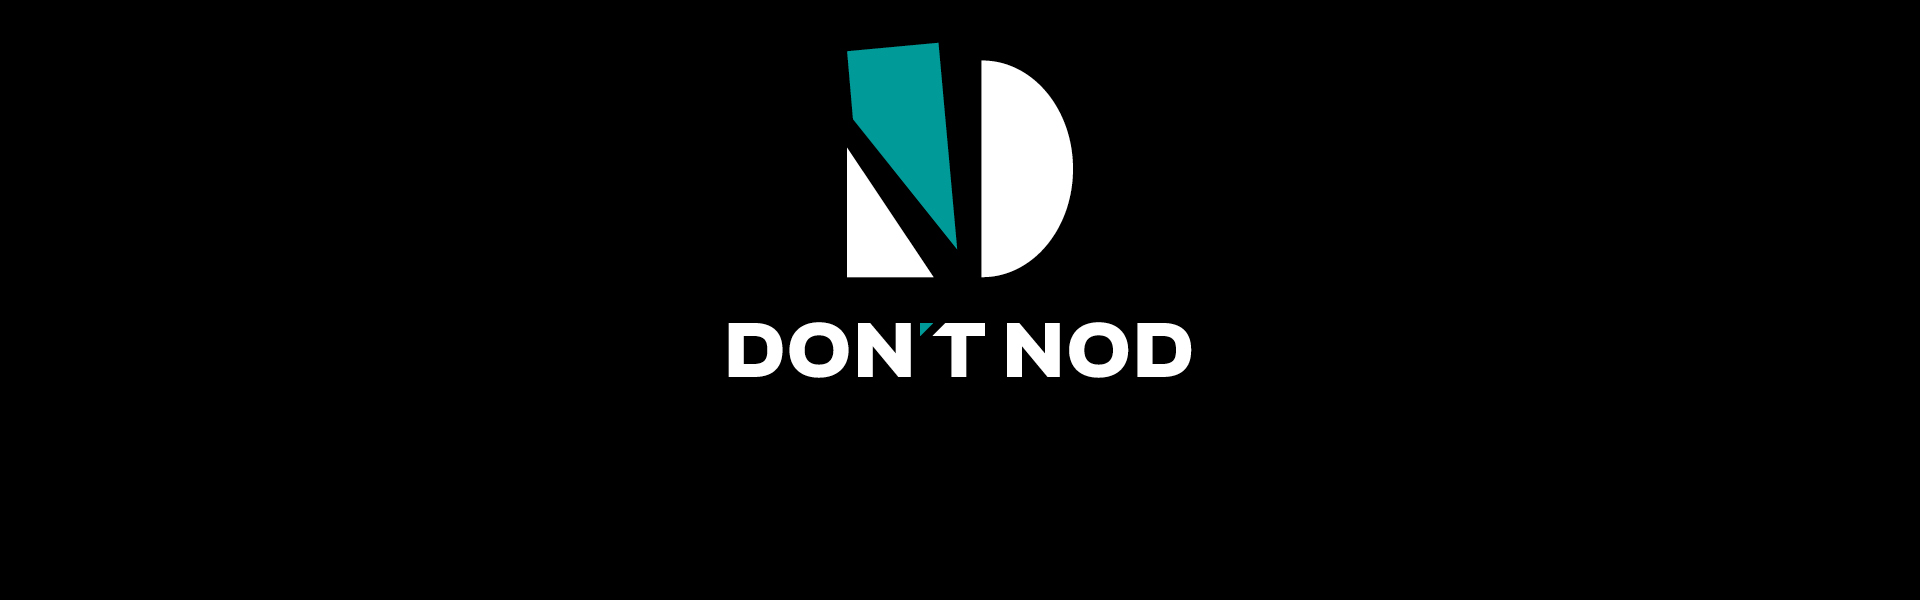 DON’T NOD unveils a new visual identity  